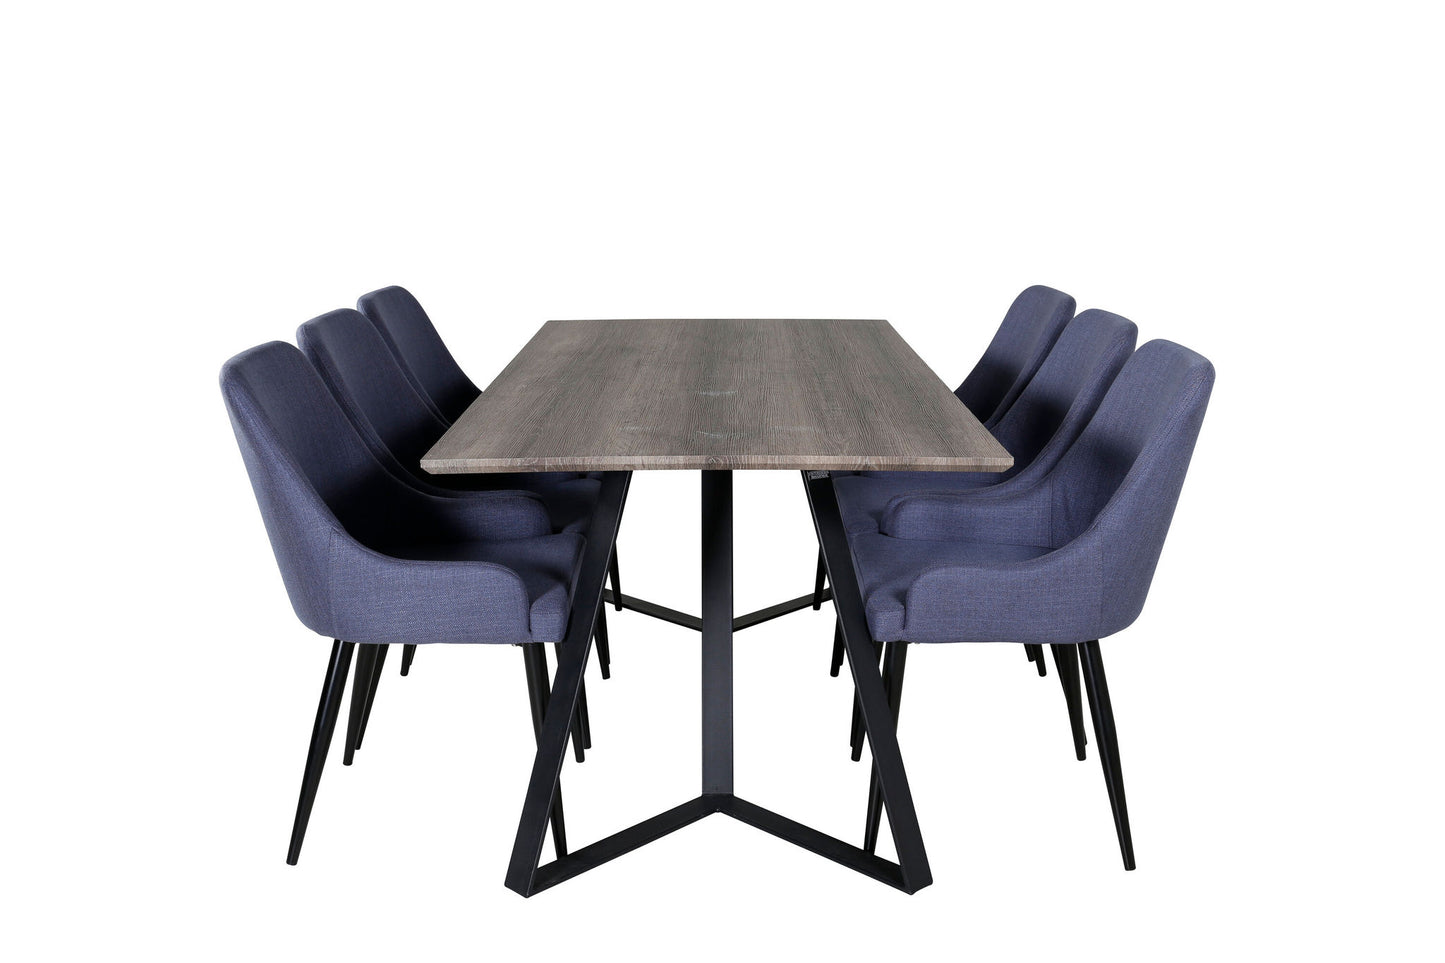 Maria - Spisebord, 180*90*H75 - Grå / Sort+ Plaza Spisebordsstol - Sorte ben - Blåt stof